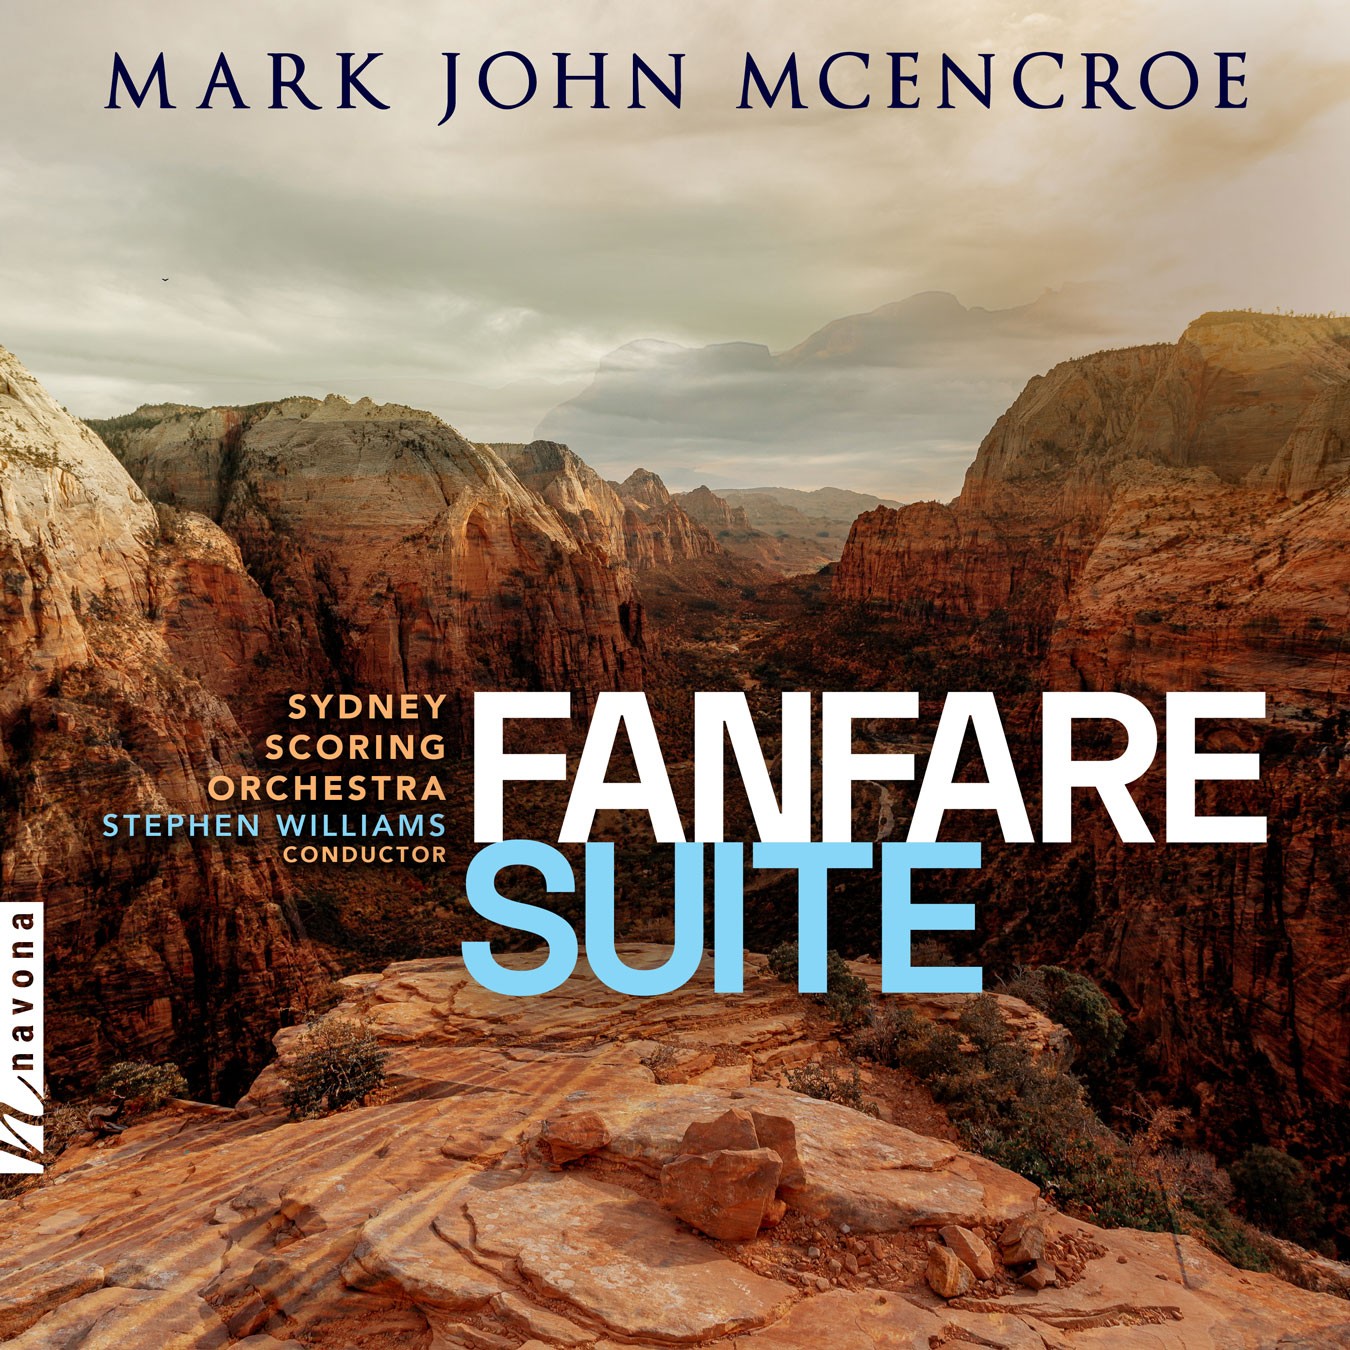 FANFARE SUITE - Mark John McEncroe - album cover